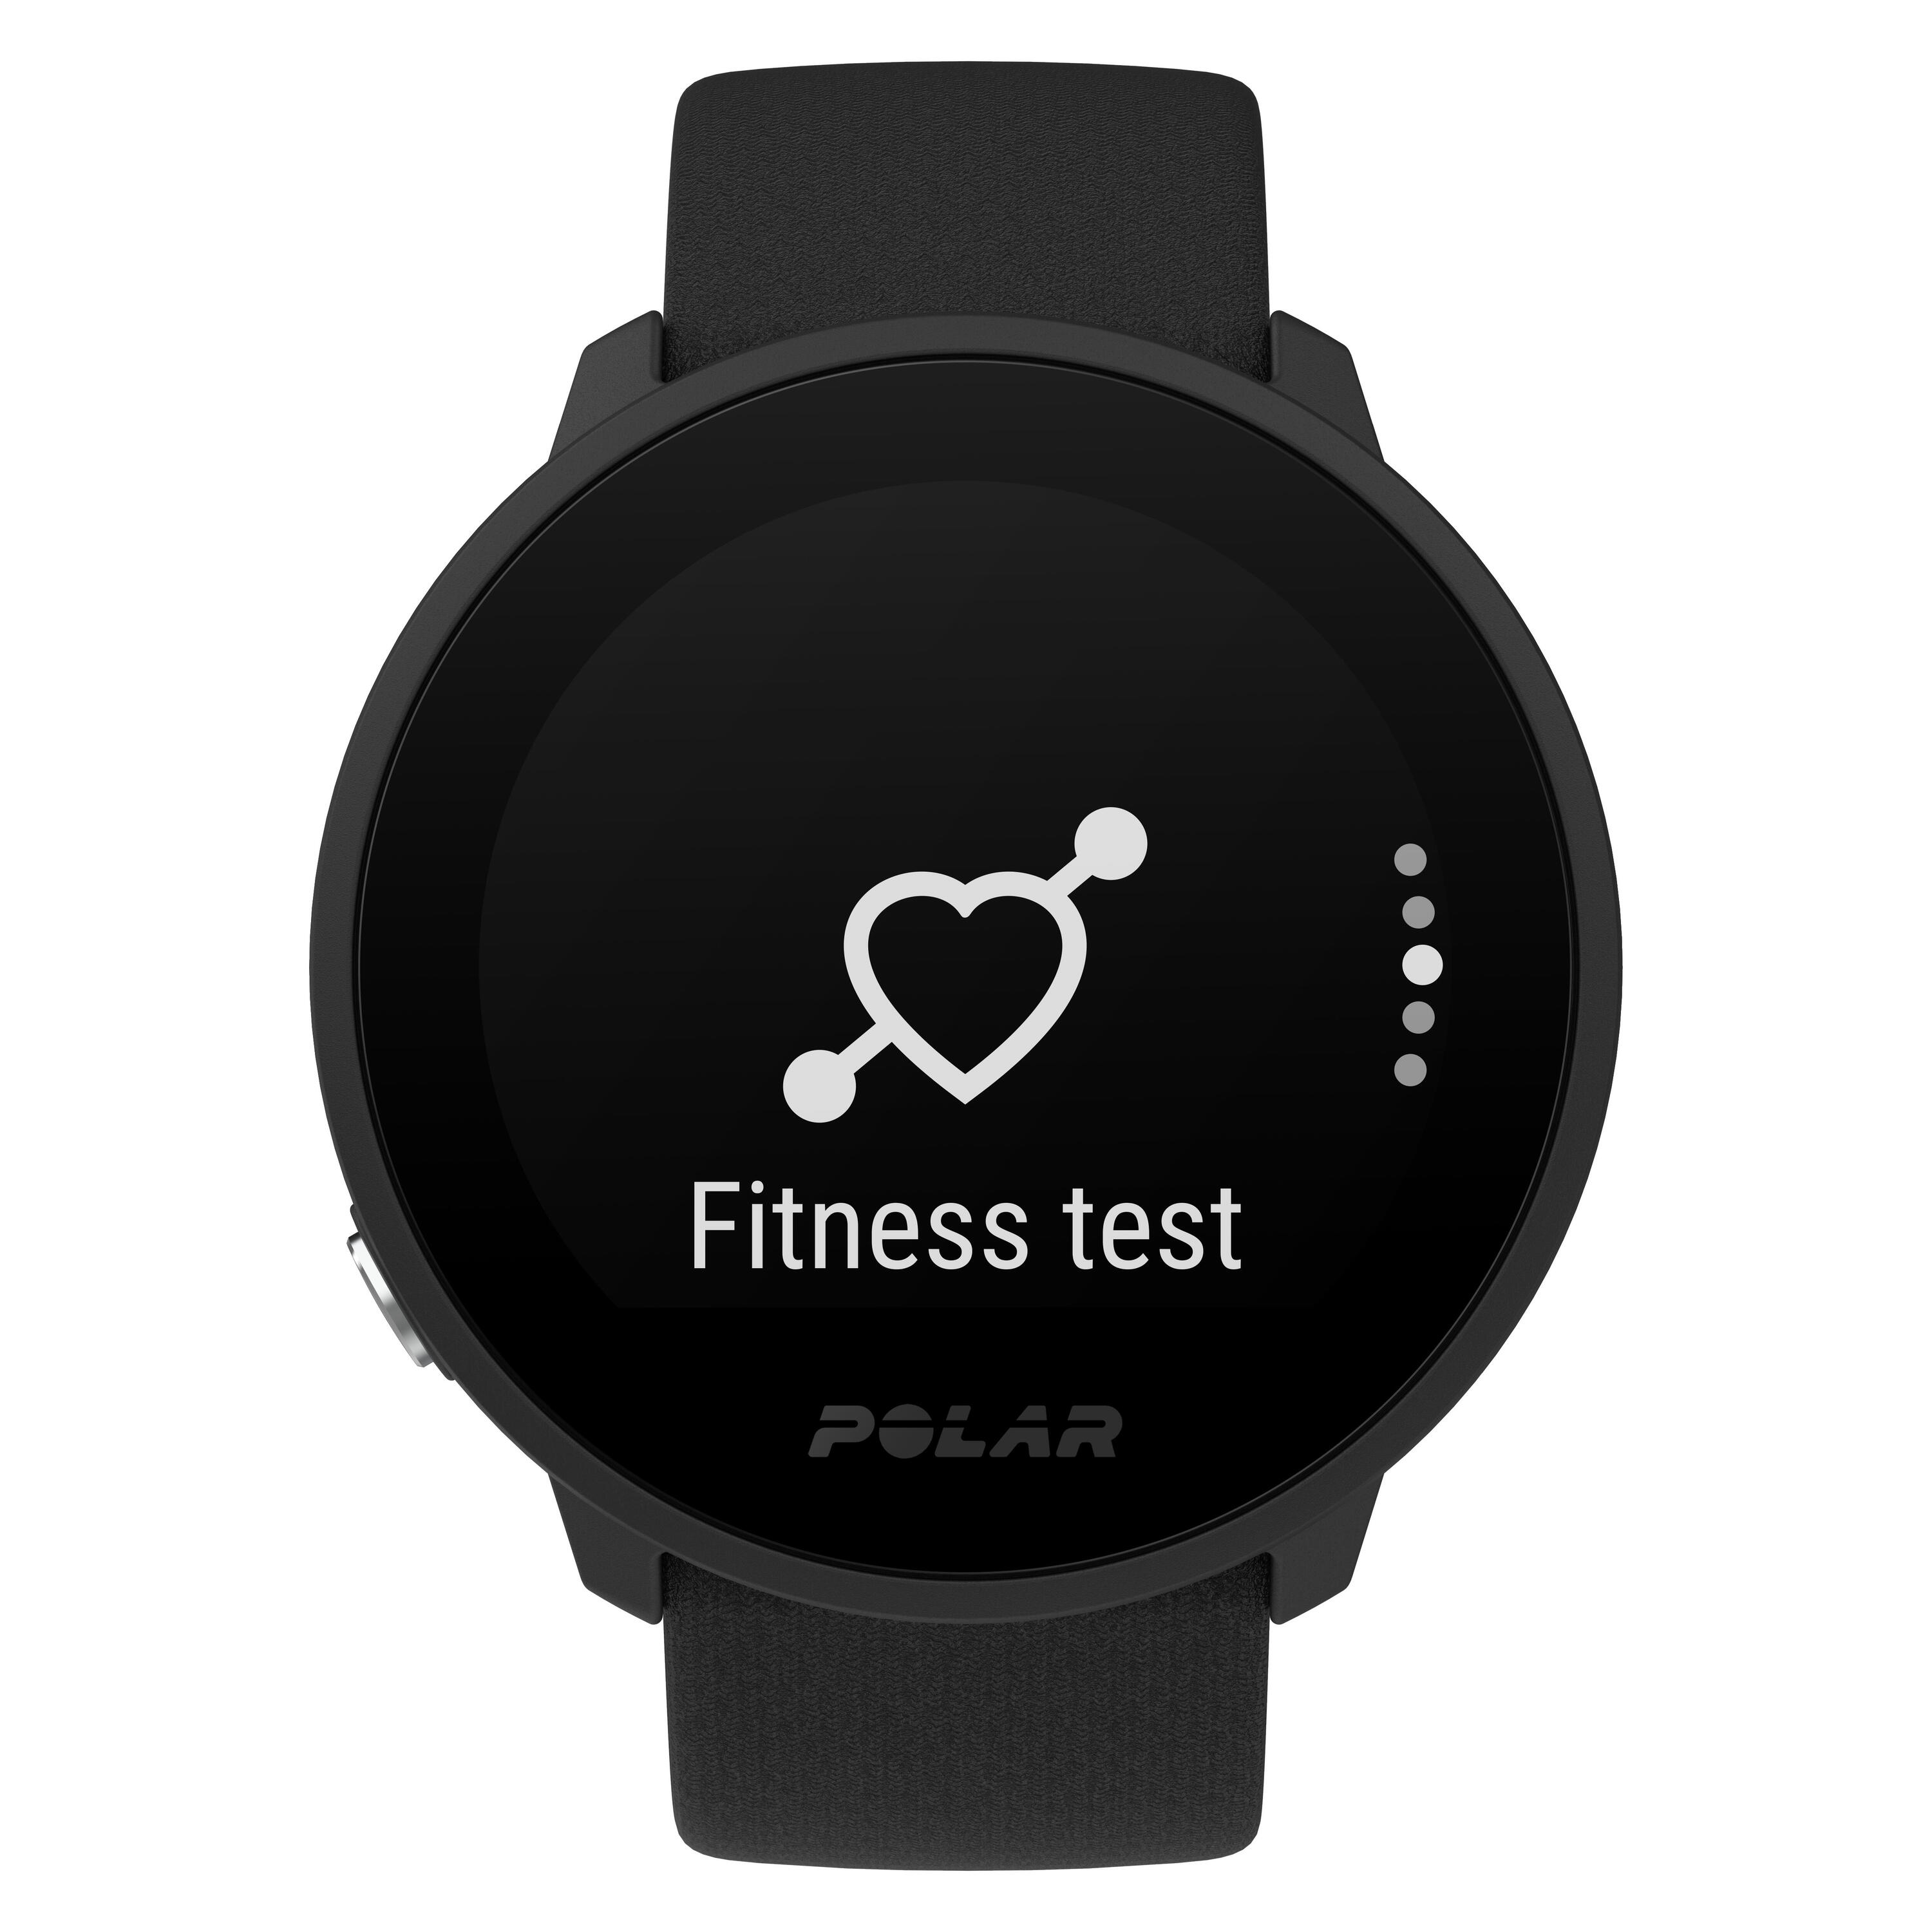 Fitness Smartwatch with Sleep Tracking Unite - Black 8/13